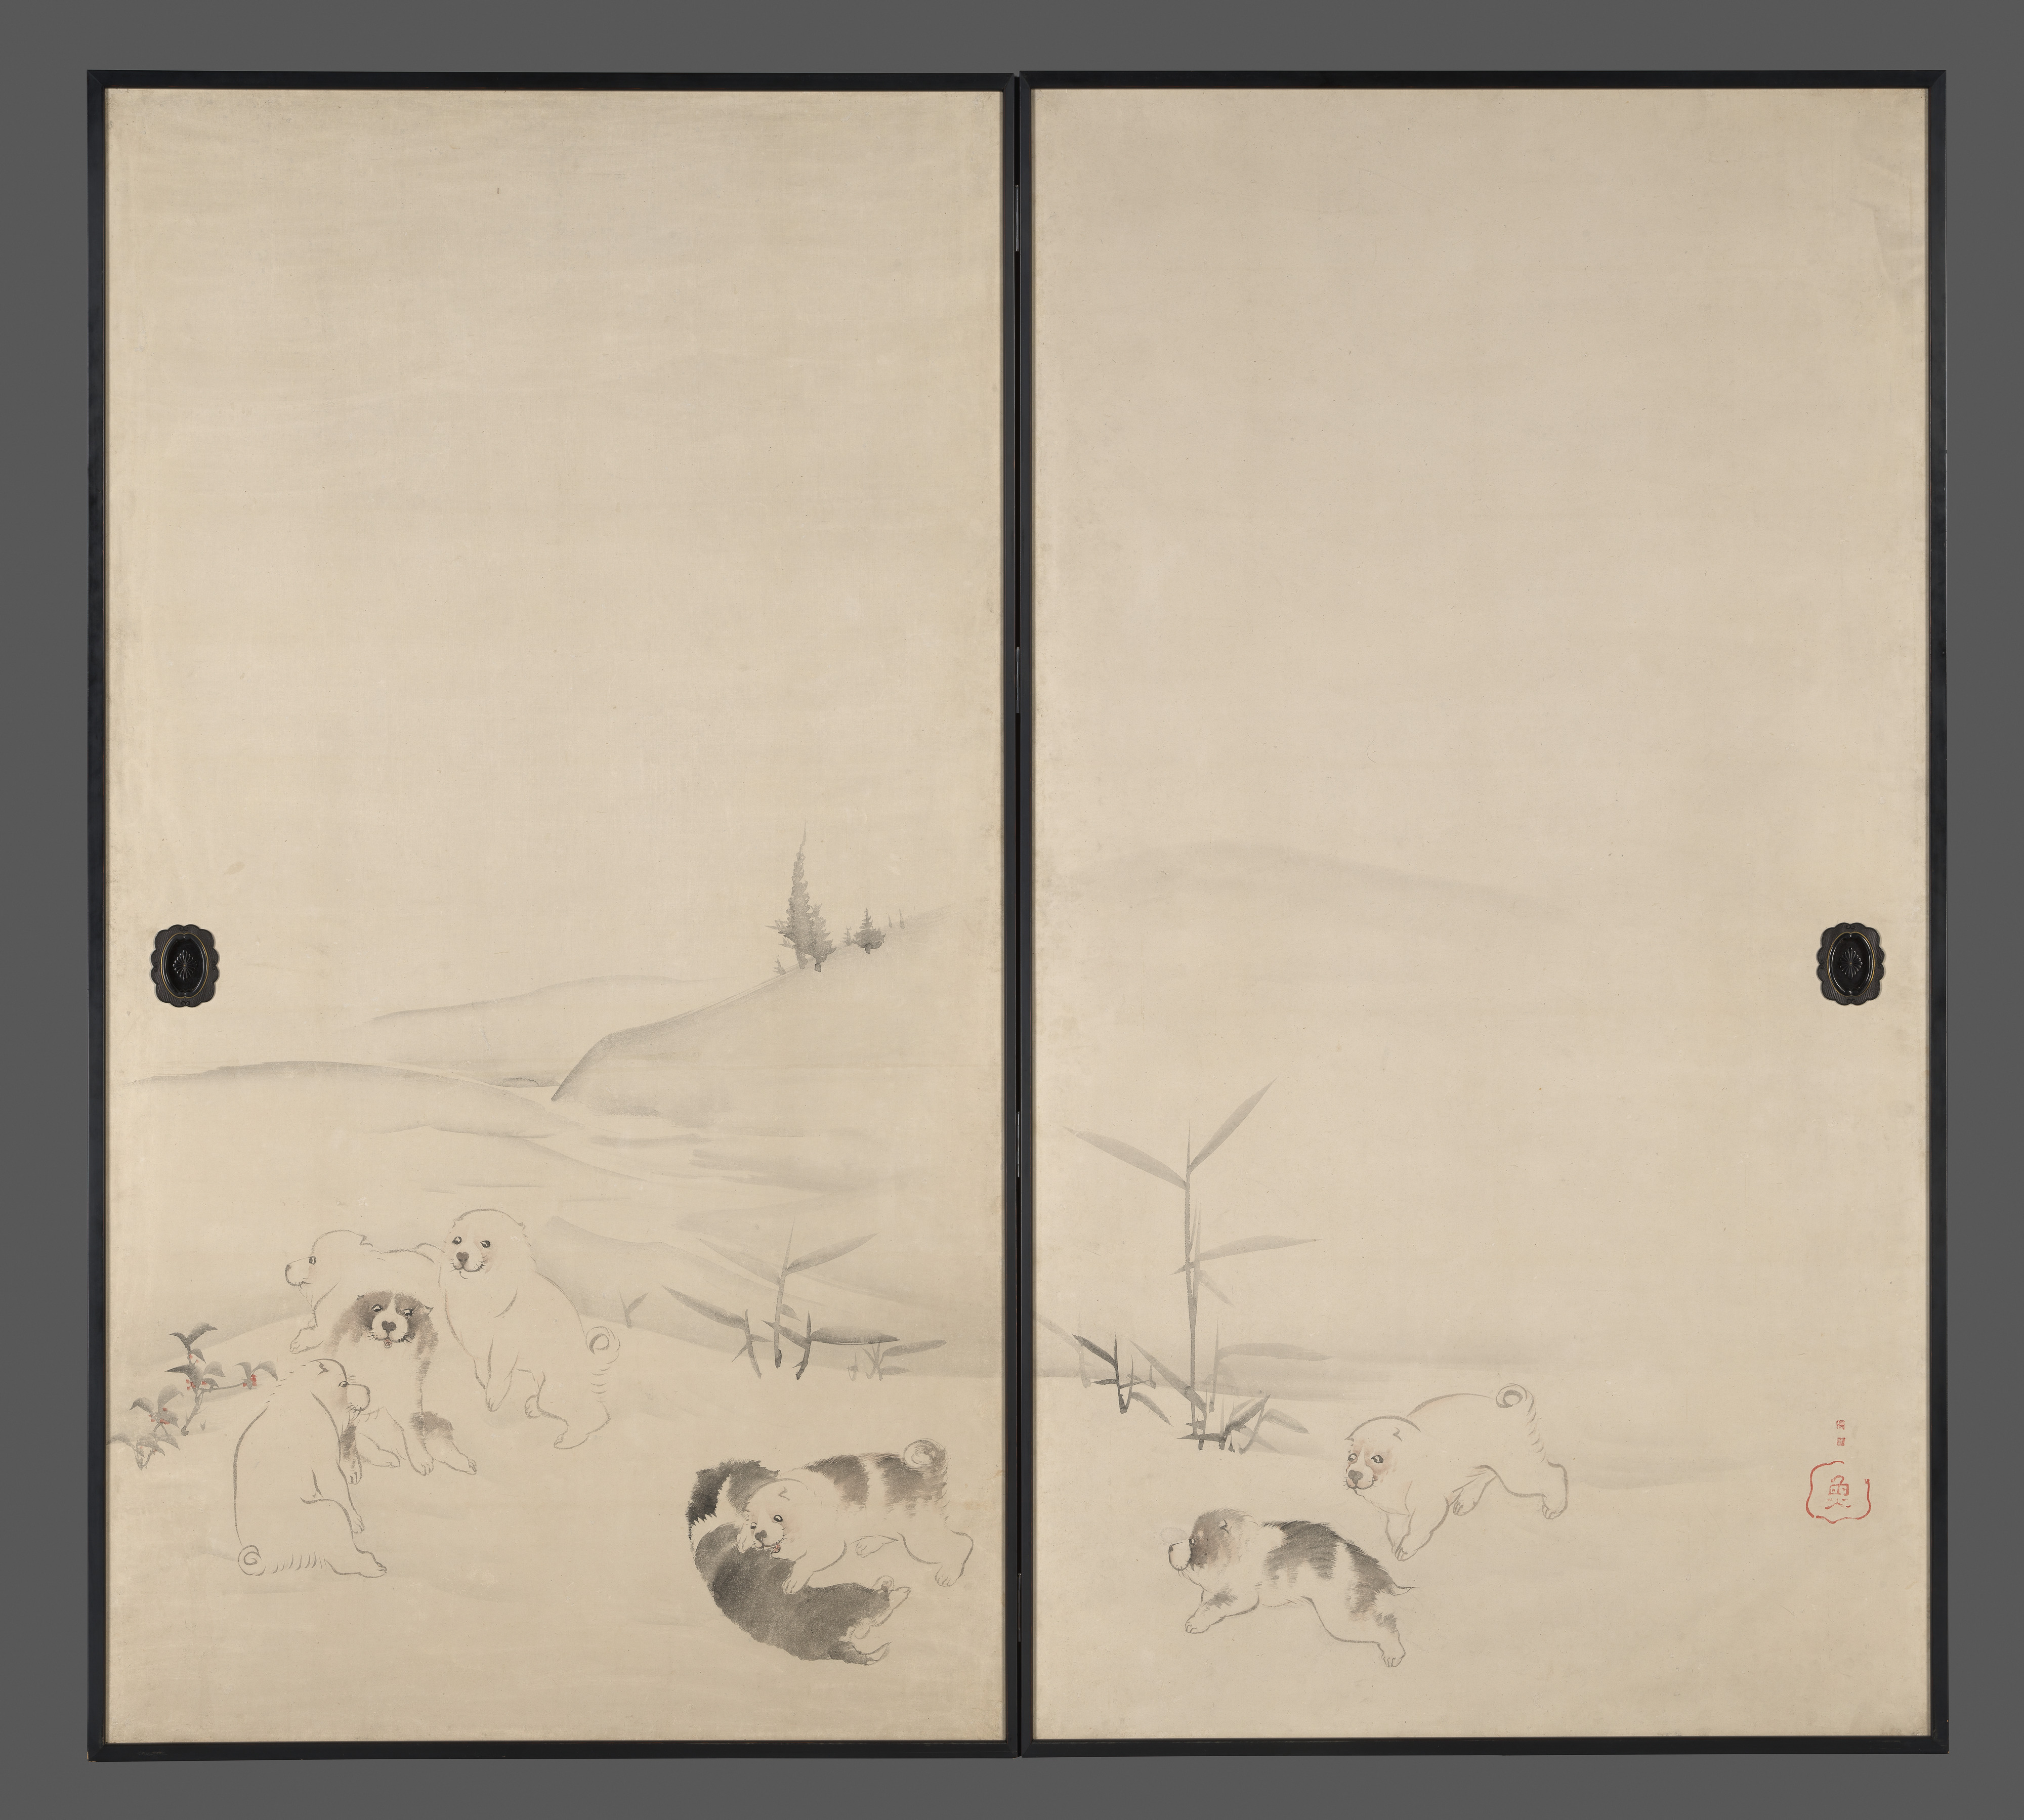 雪狗子図襖 by Nagasawa Rosetsu - 1792〜99年 - 168.7 × 183 cm 